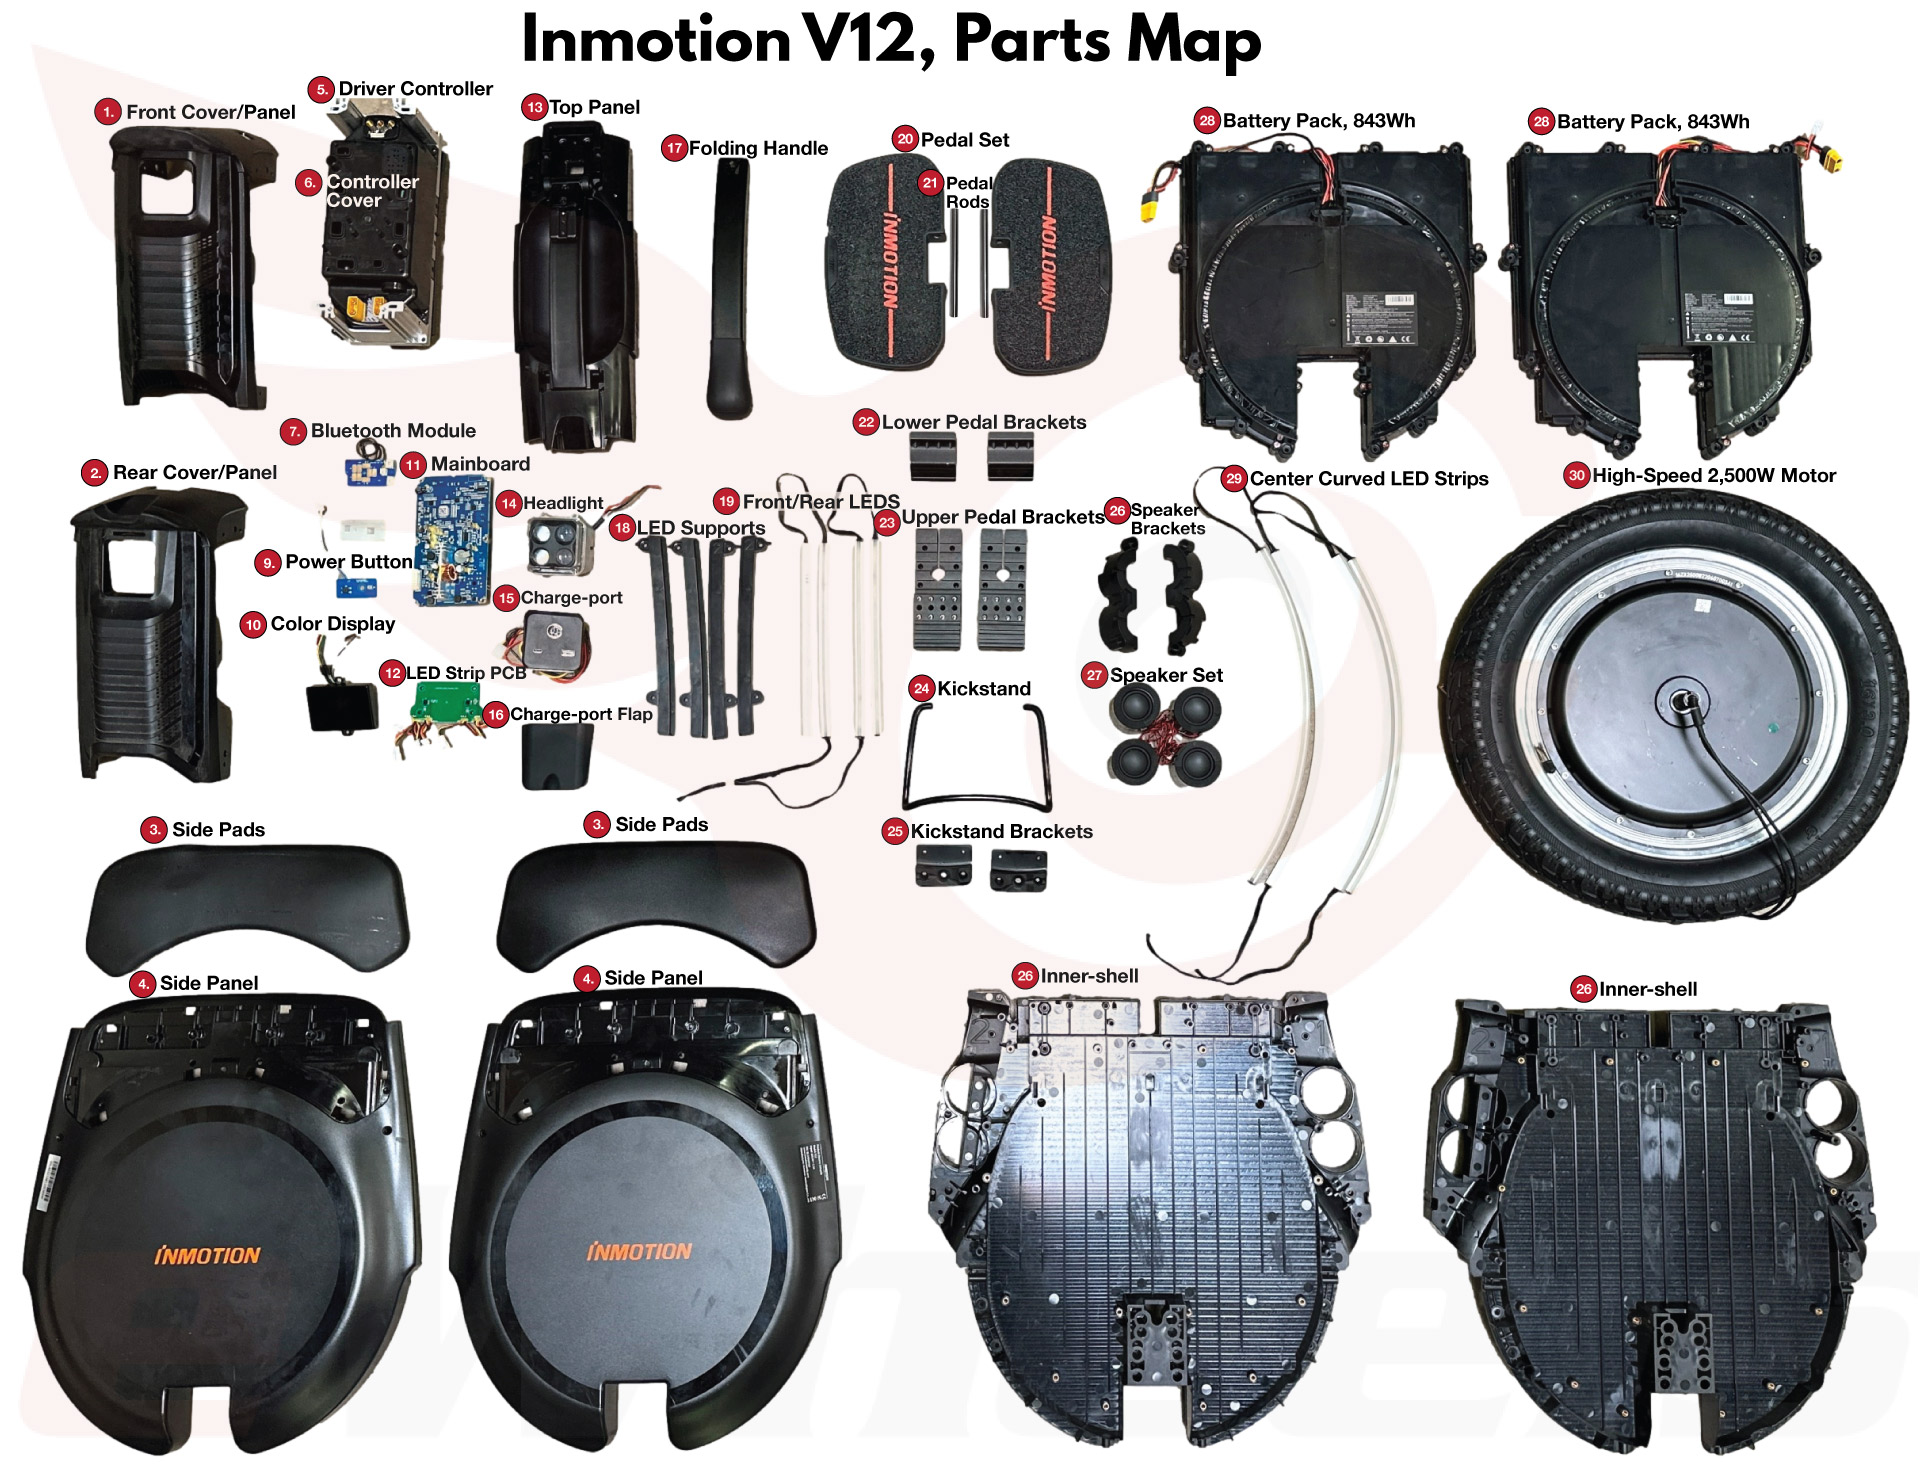 Inmotion V12 Parts Map